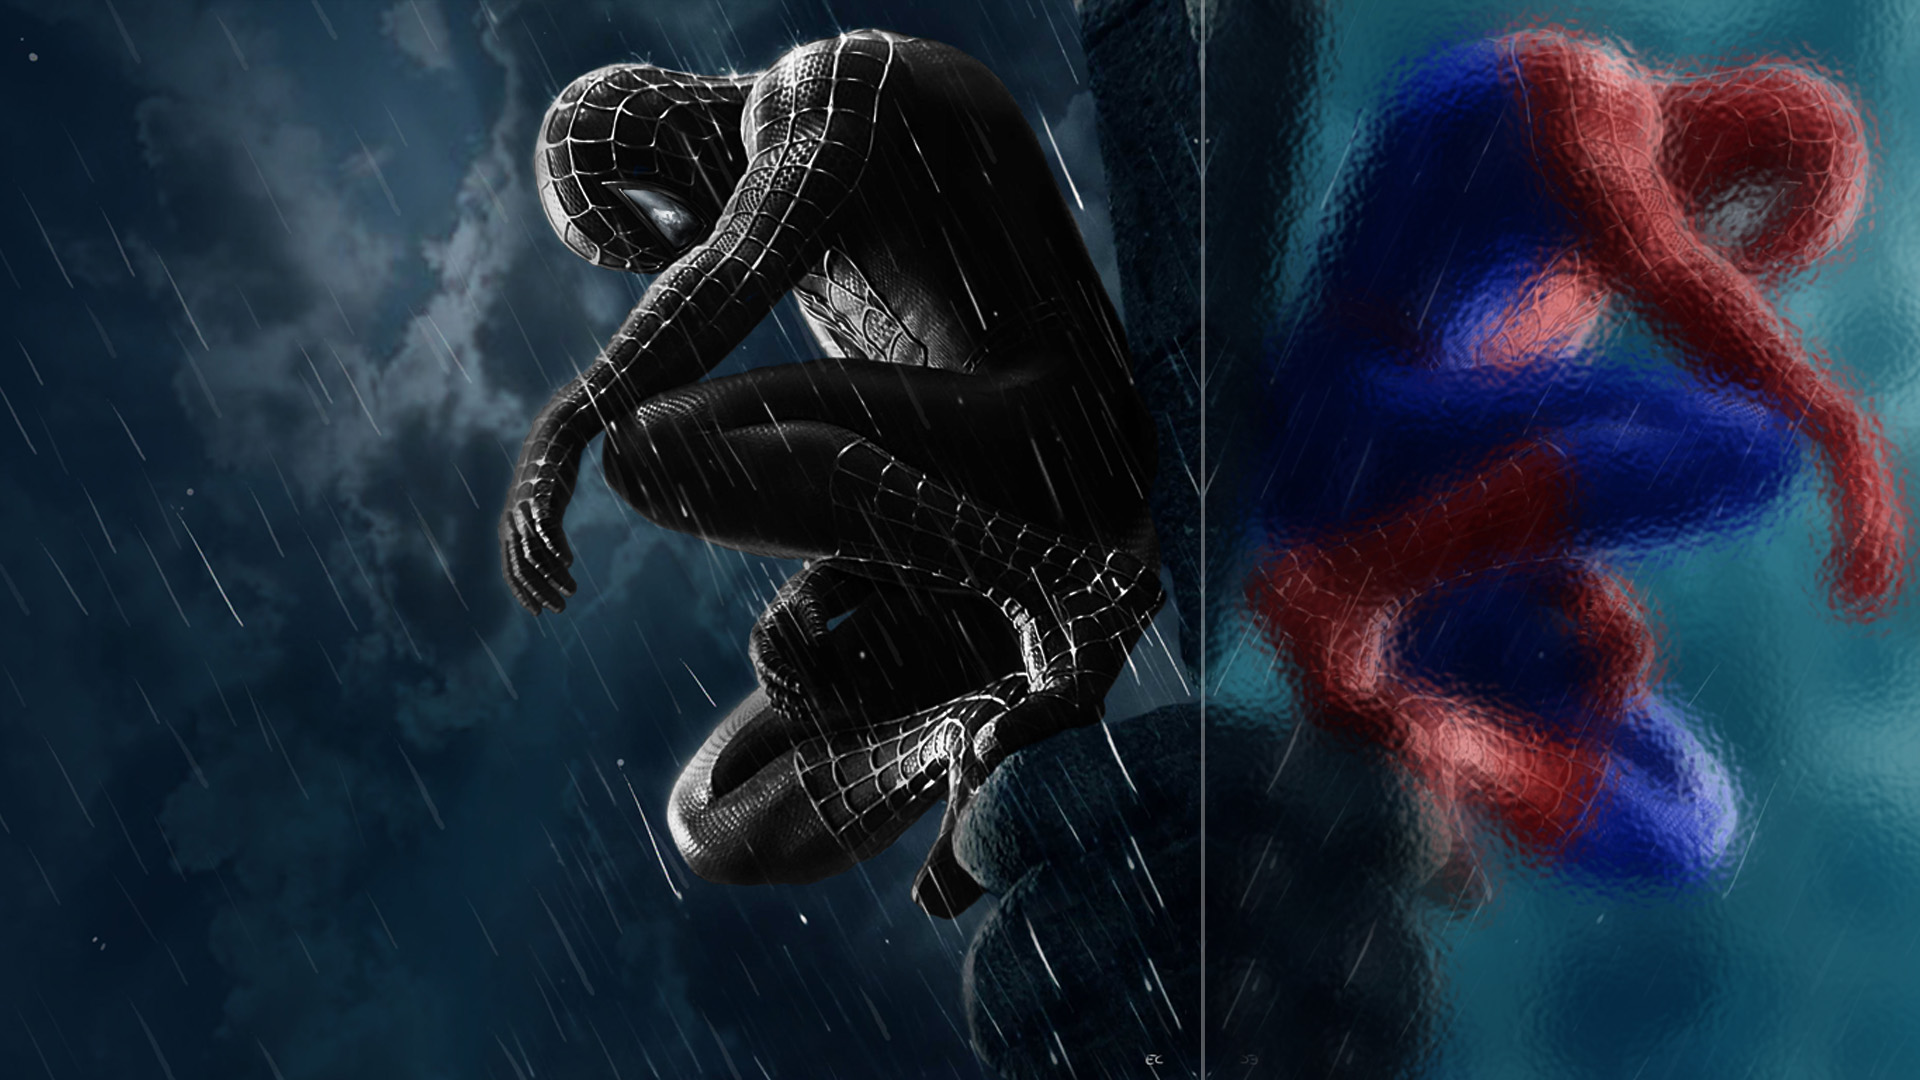 30+ Best Spiderman Wallpapers